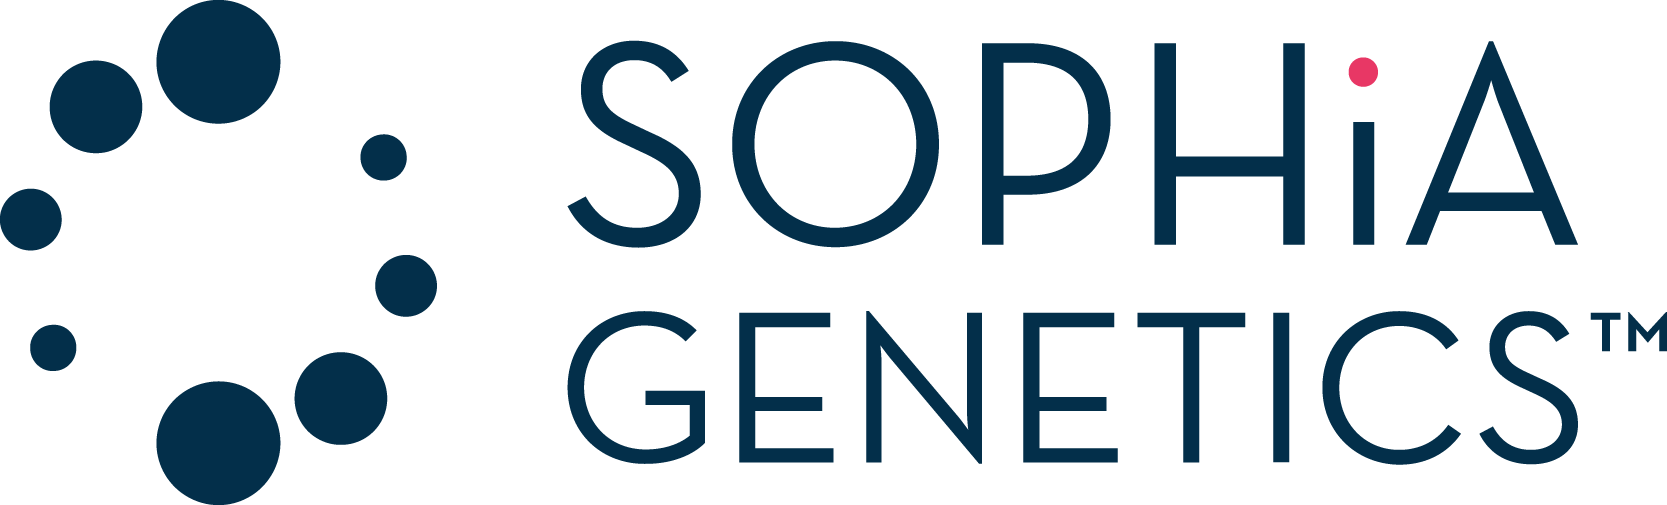 SOPHiA GENETICS_Stacked_RGB